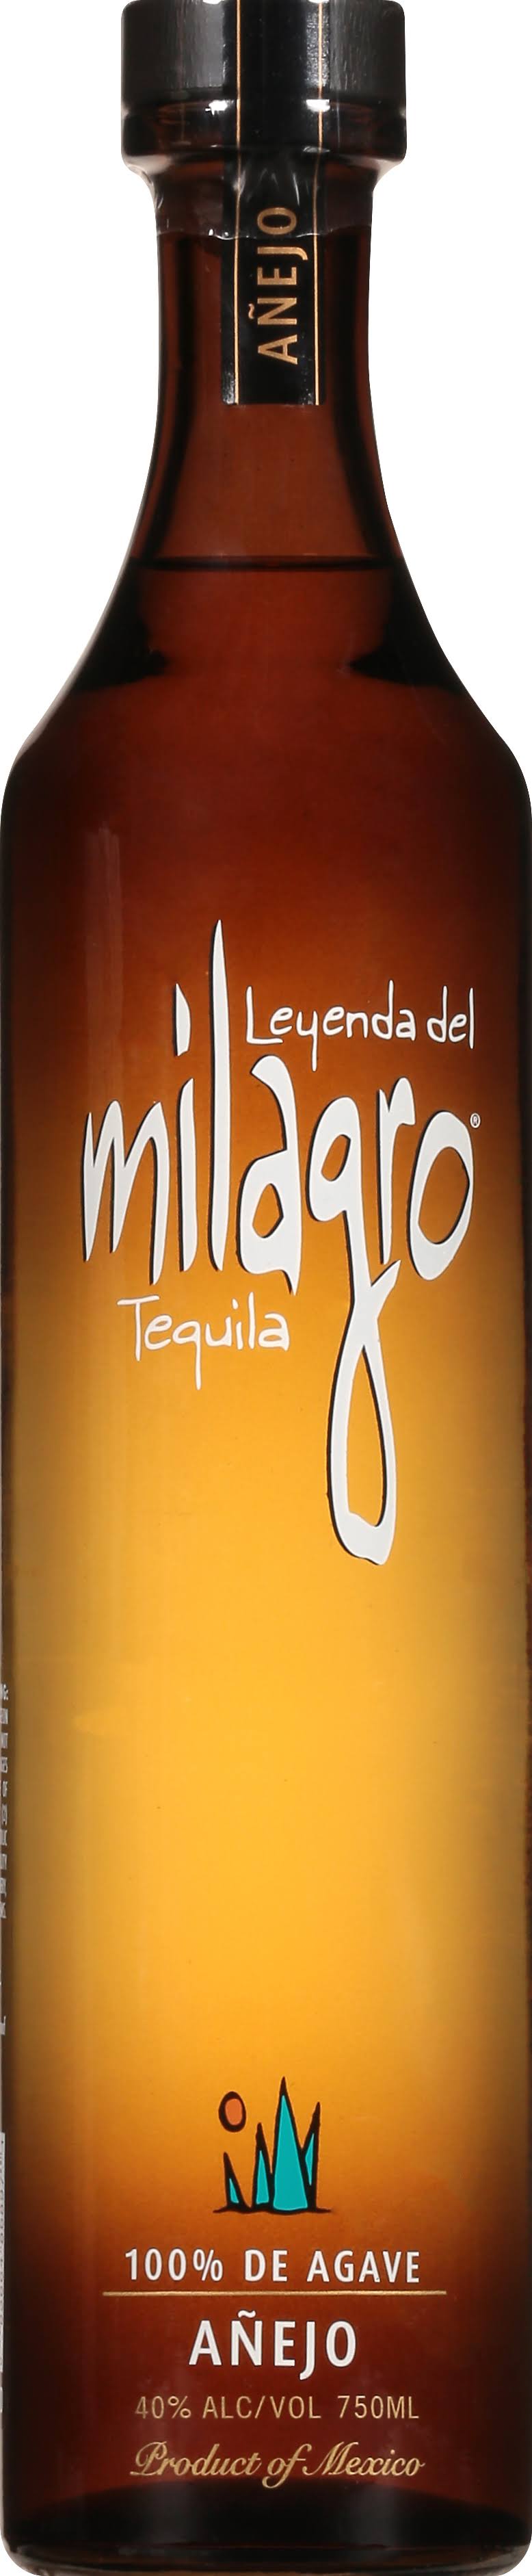 Milagro Anejo Tequila 750ml Bottle